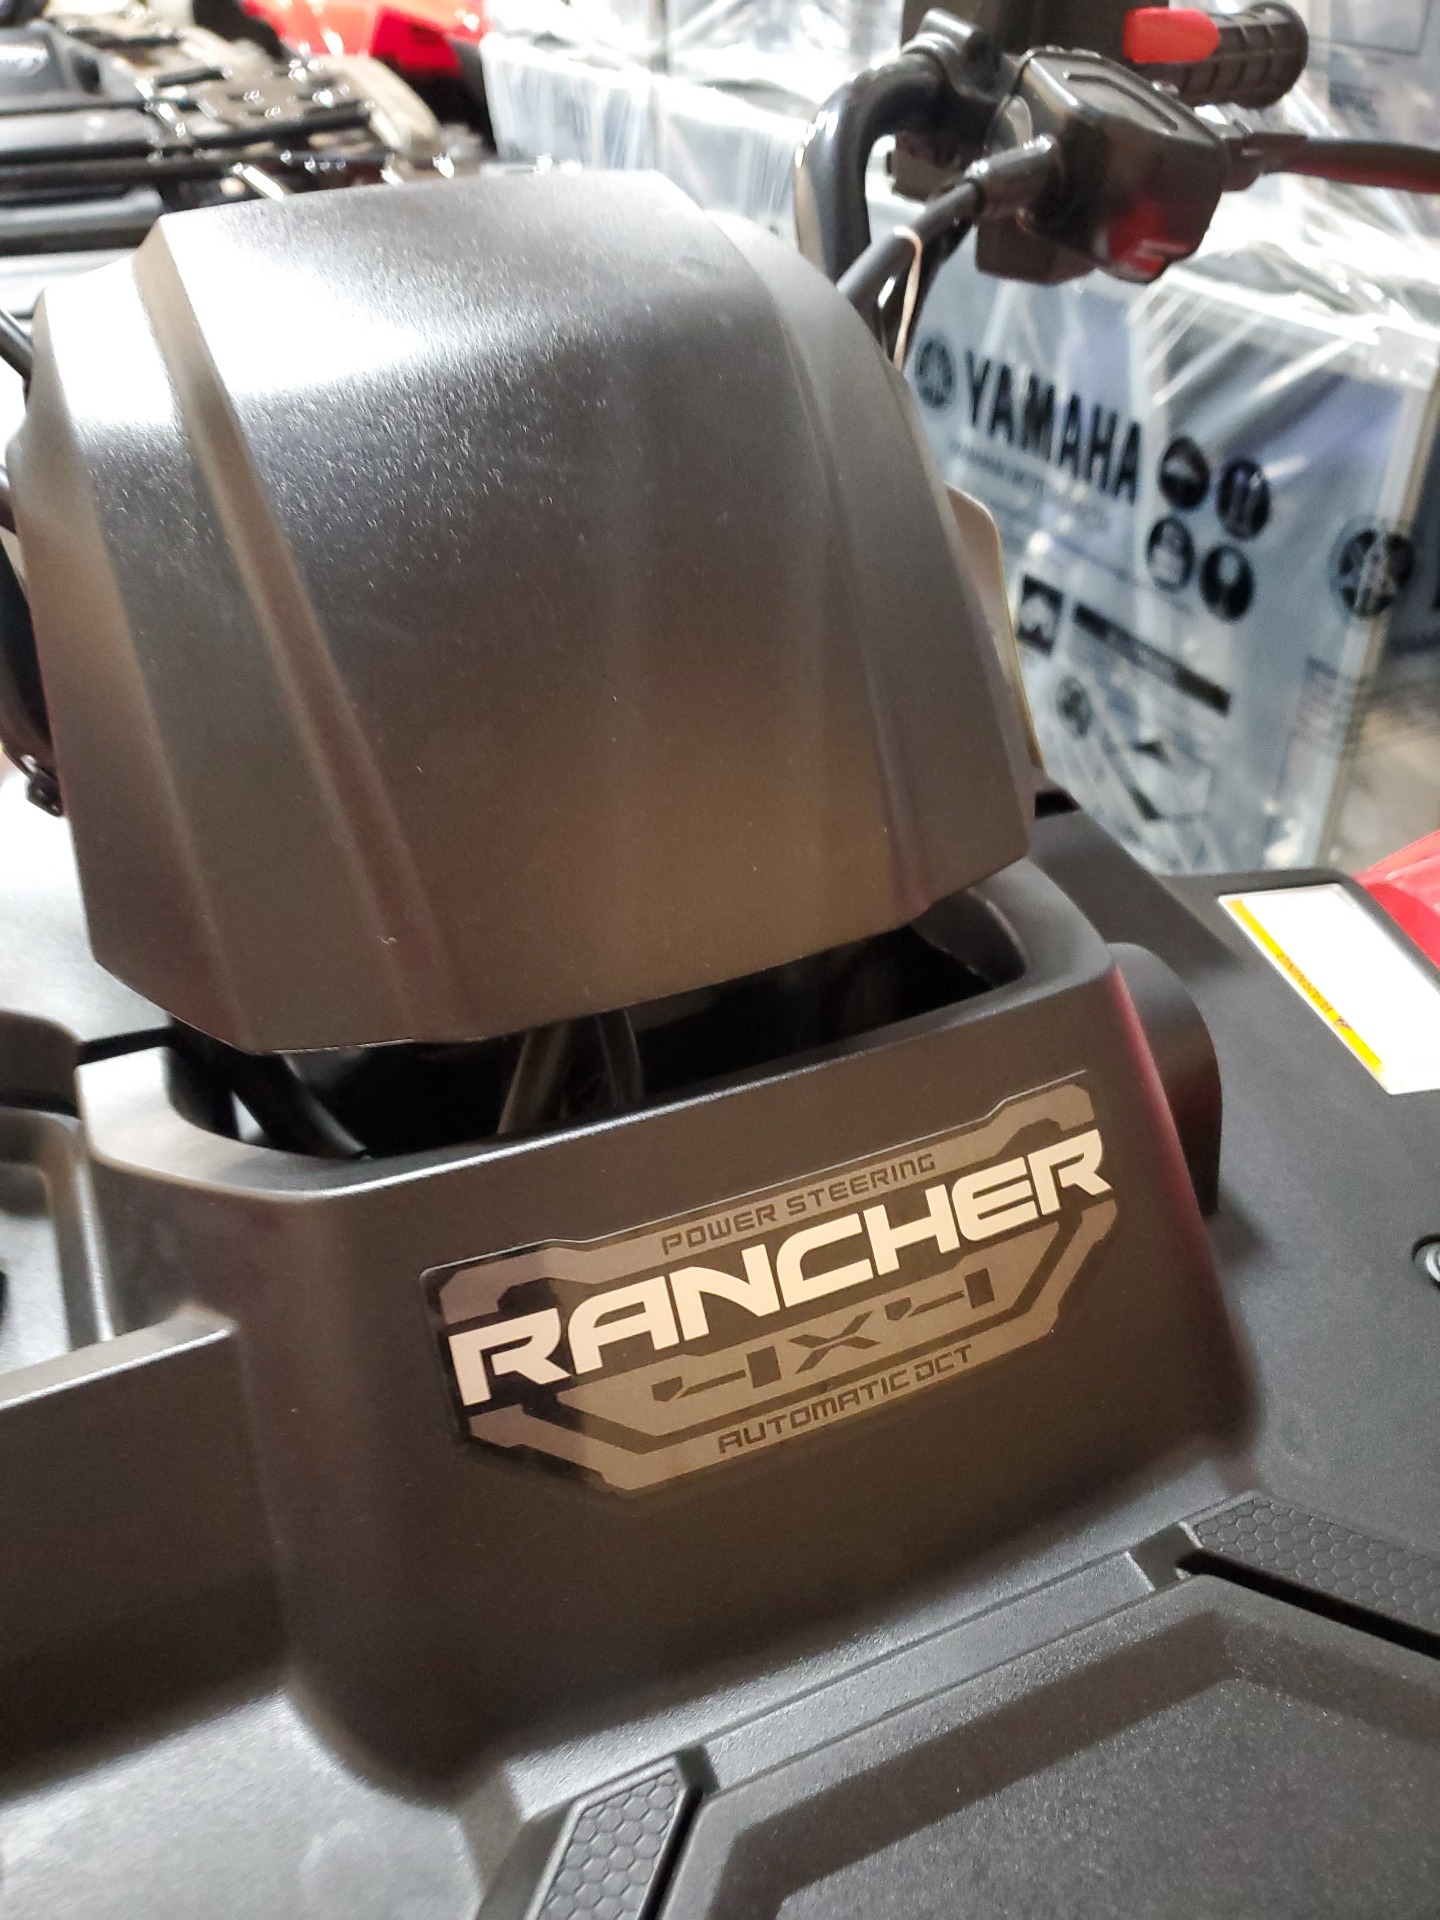 2022 Honda FourTrax Rancher 4x4 Automatic DCT IRS EPS in Eureka, California - Photo 2